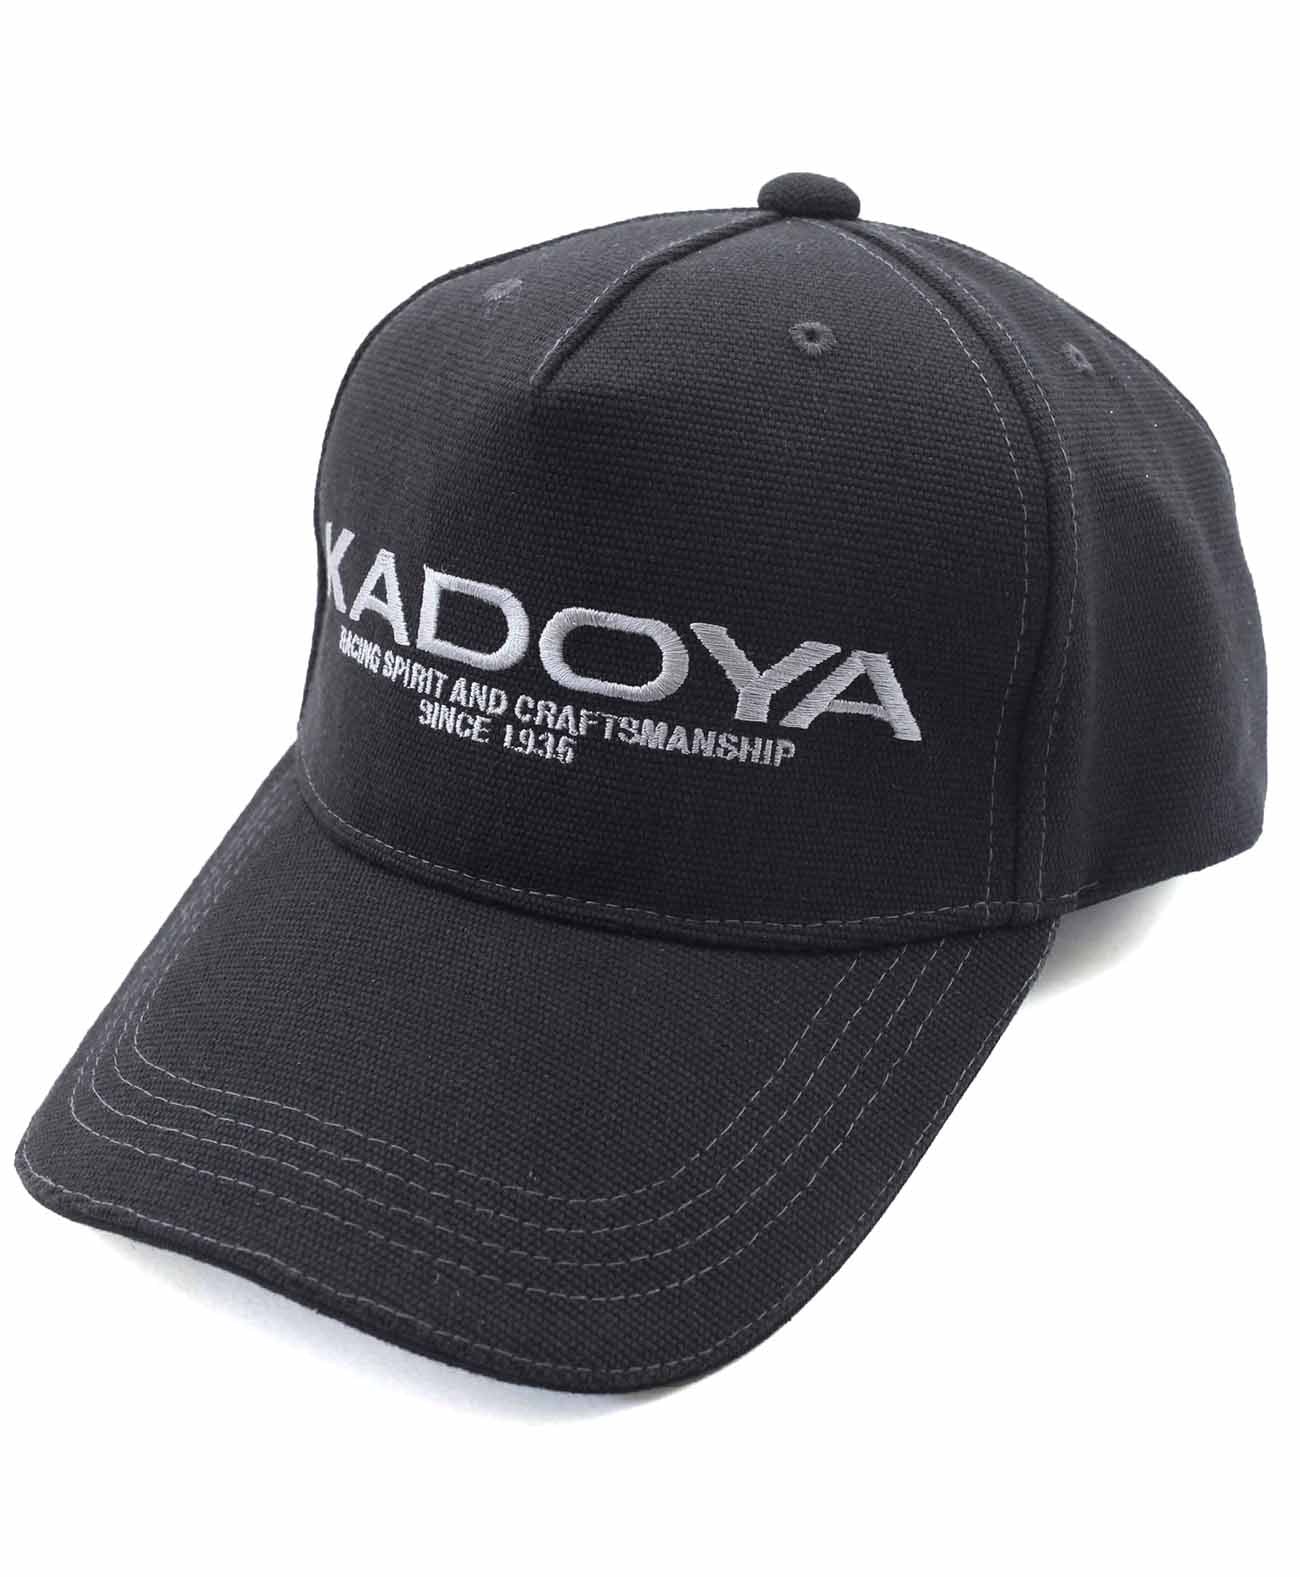 KADOYA LOGO CAP / ブラック/グレー